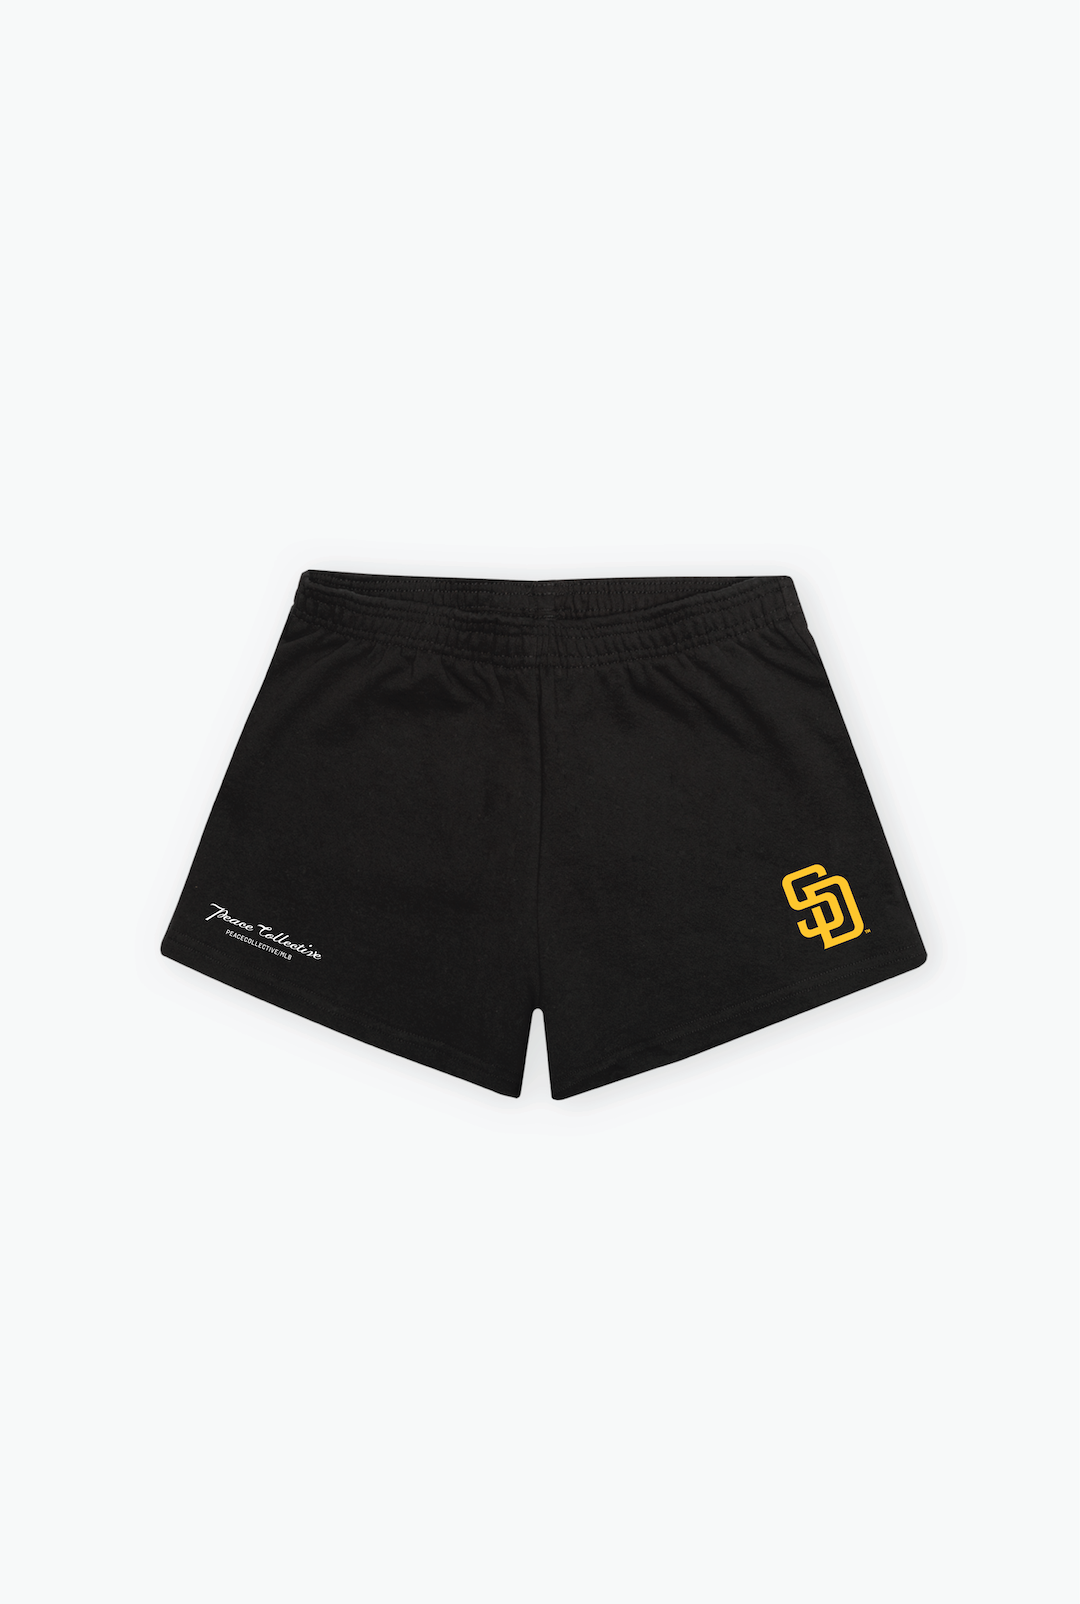 San Diego Padres Women's Fleece Shorts - Black